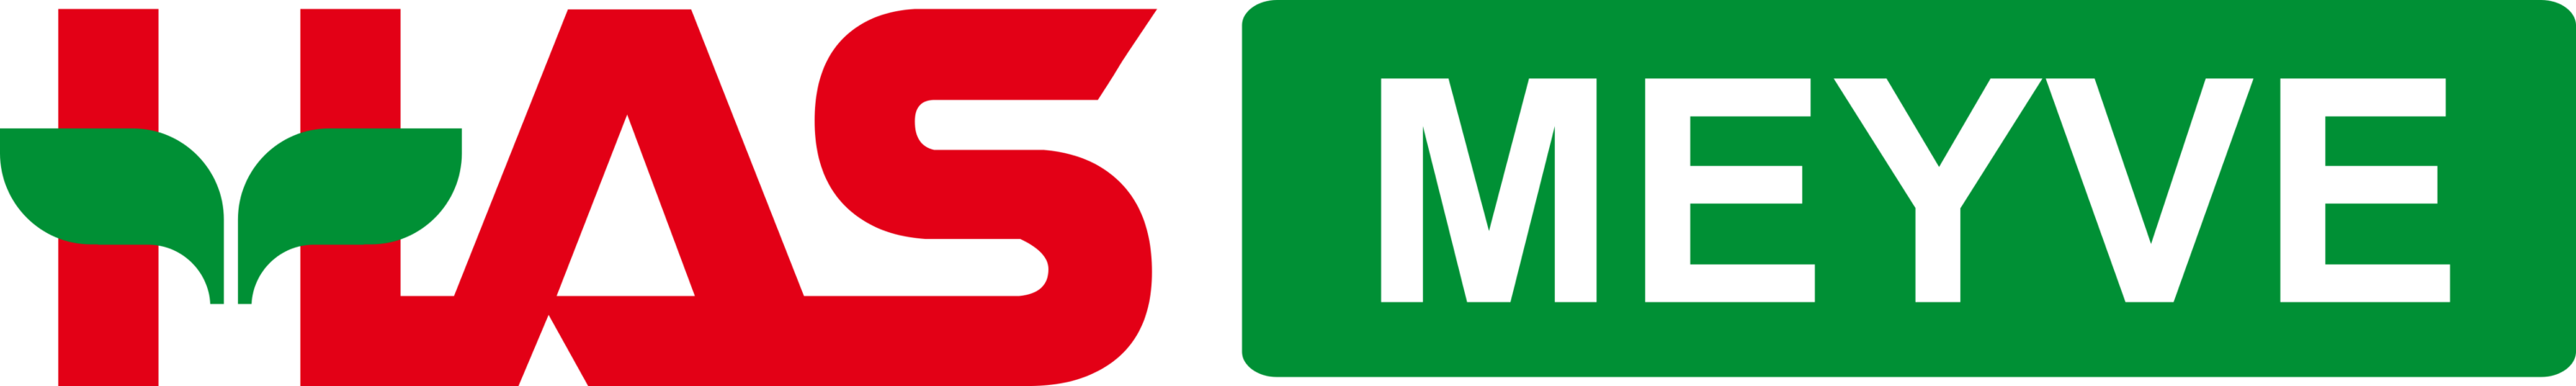 Has Meyve Logo